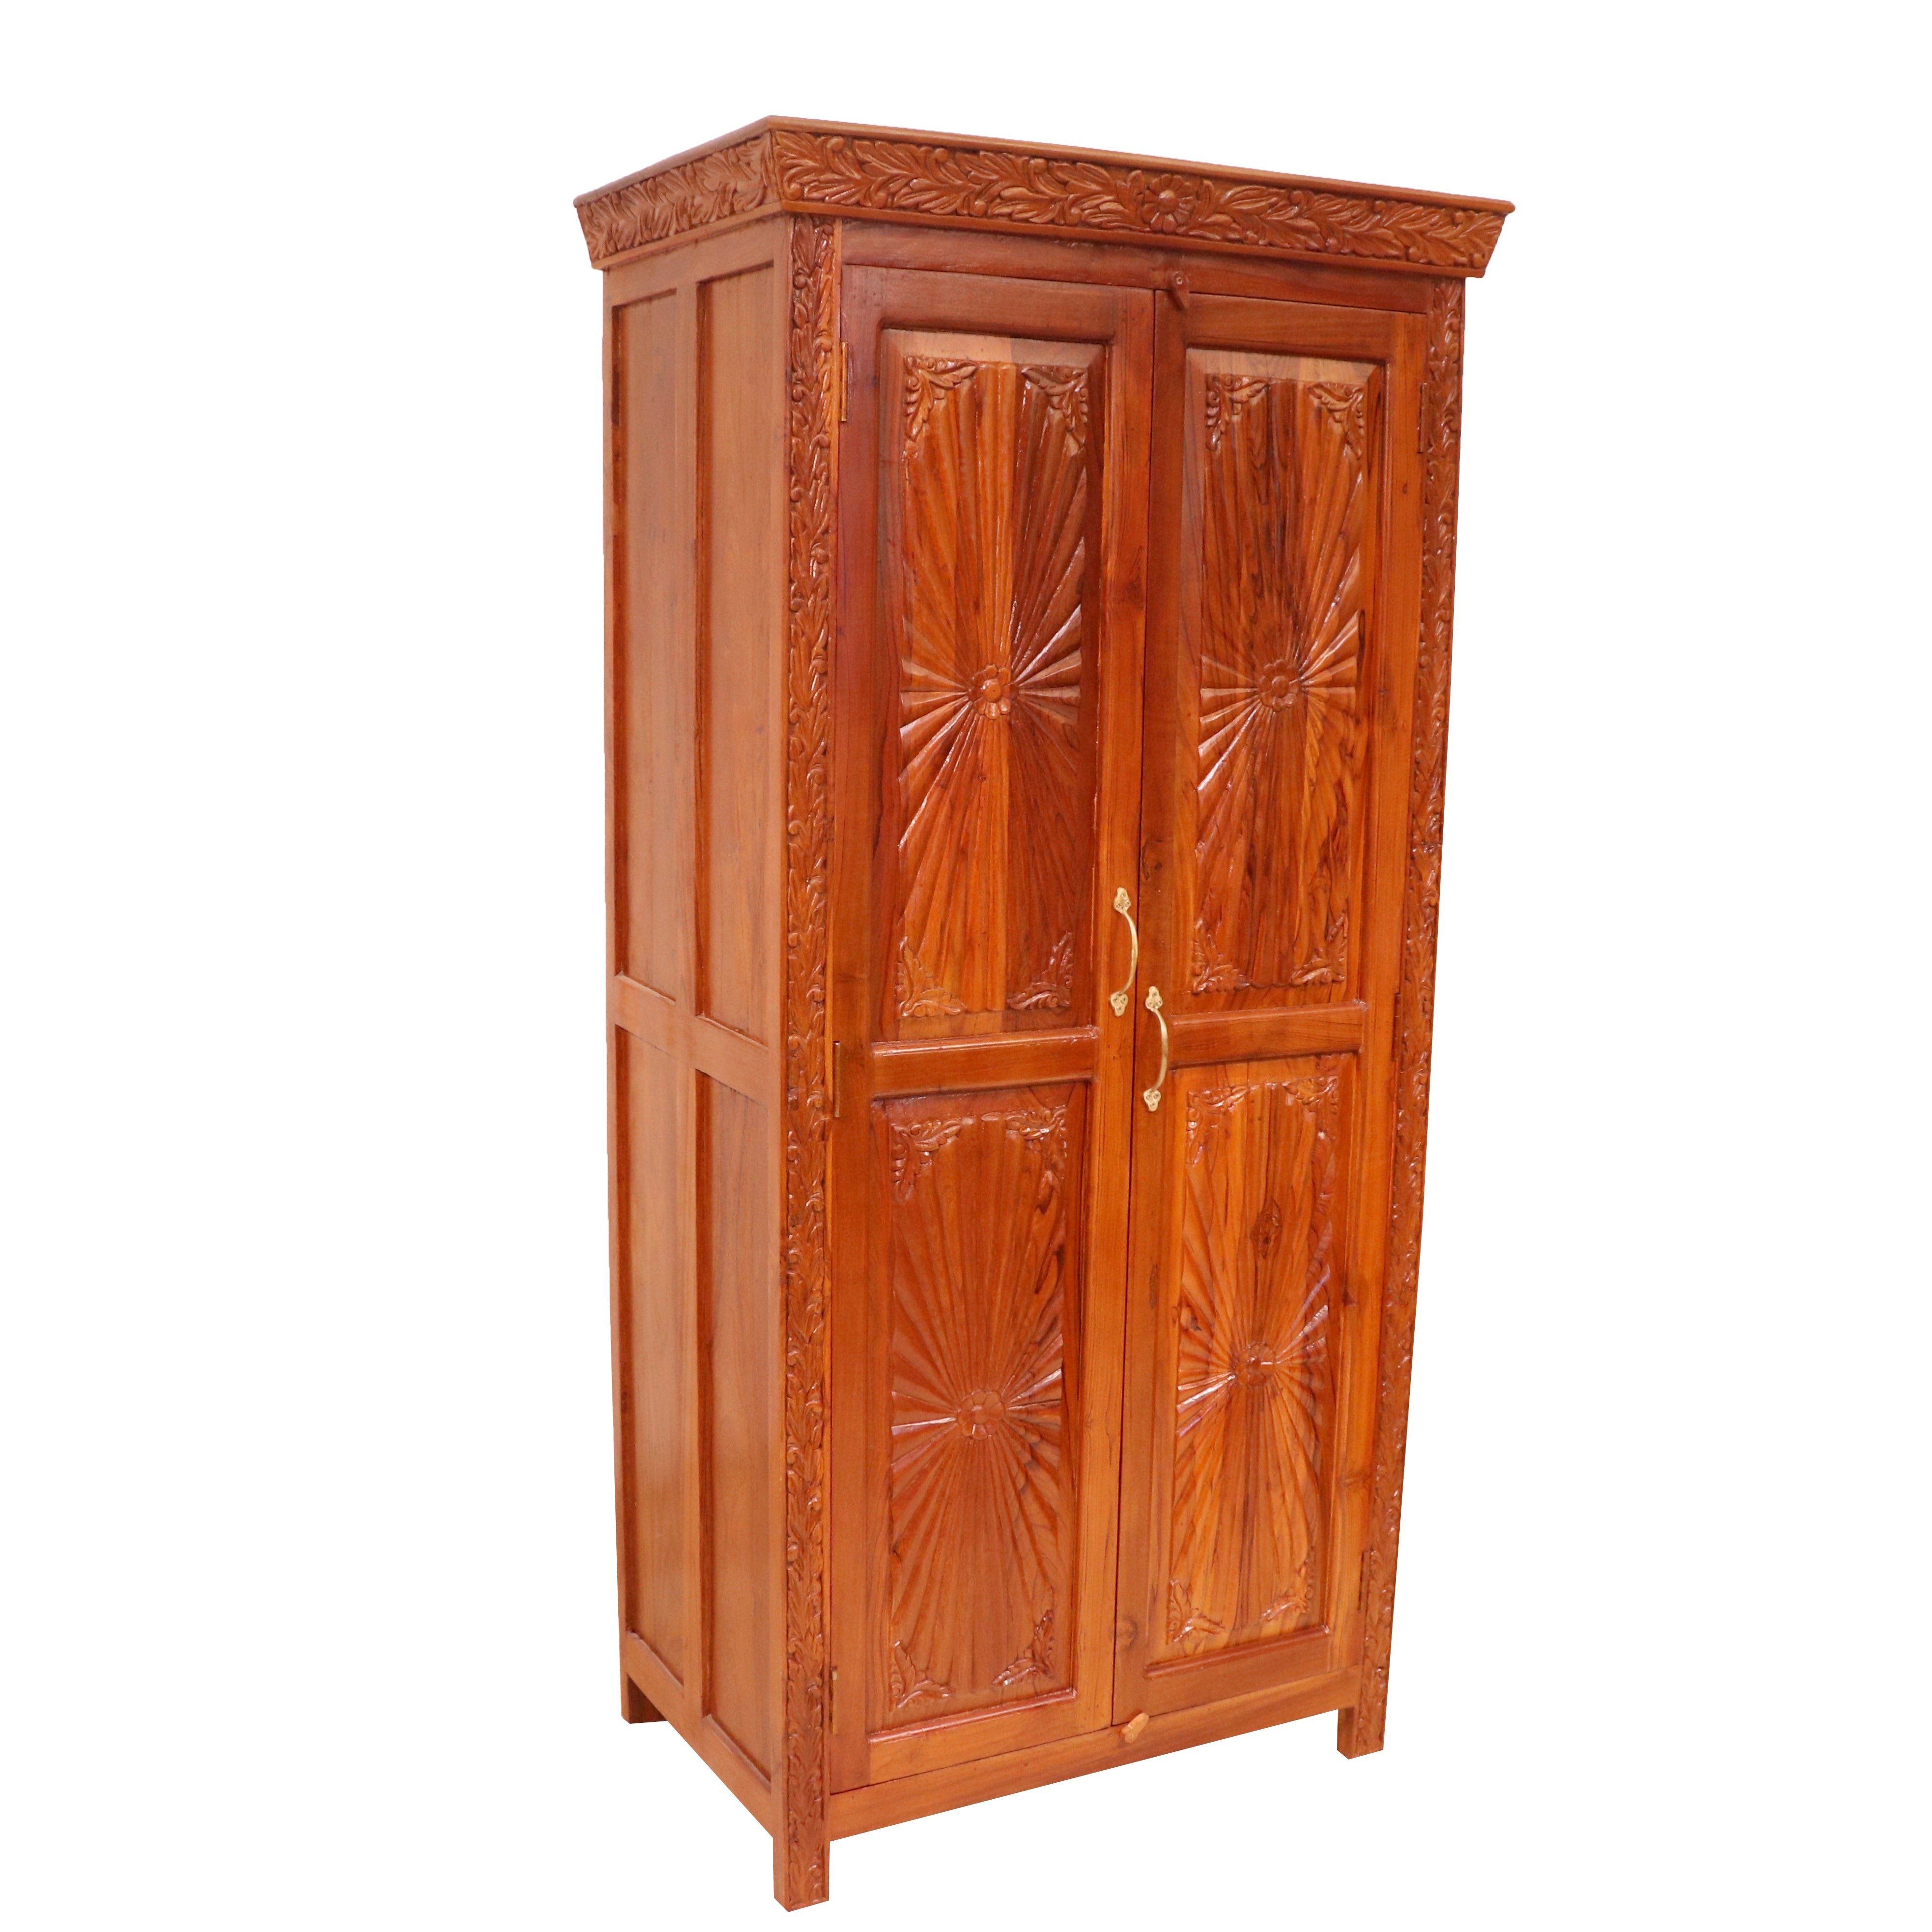 Adorable Decent Storage Vintage Handmade Wooden Large Almirah for Home Wardrobe